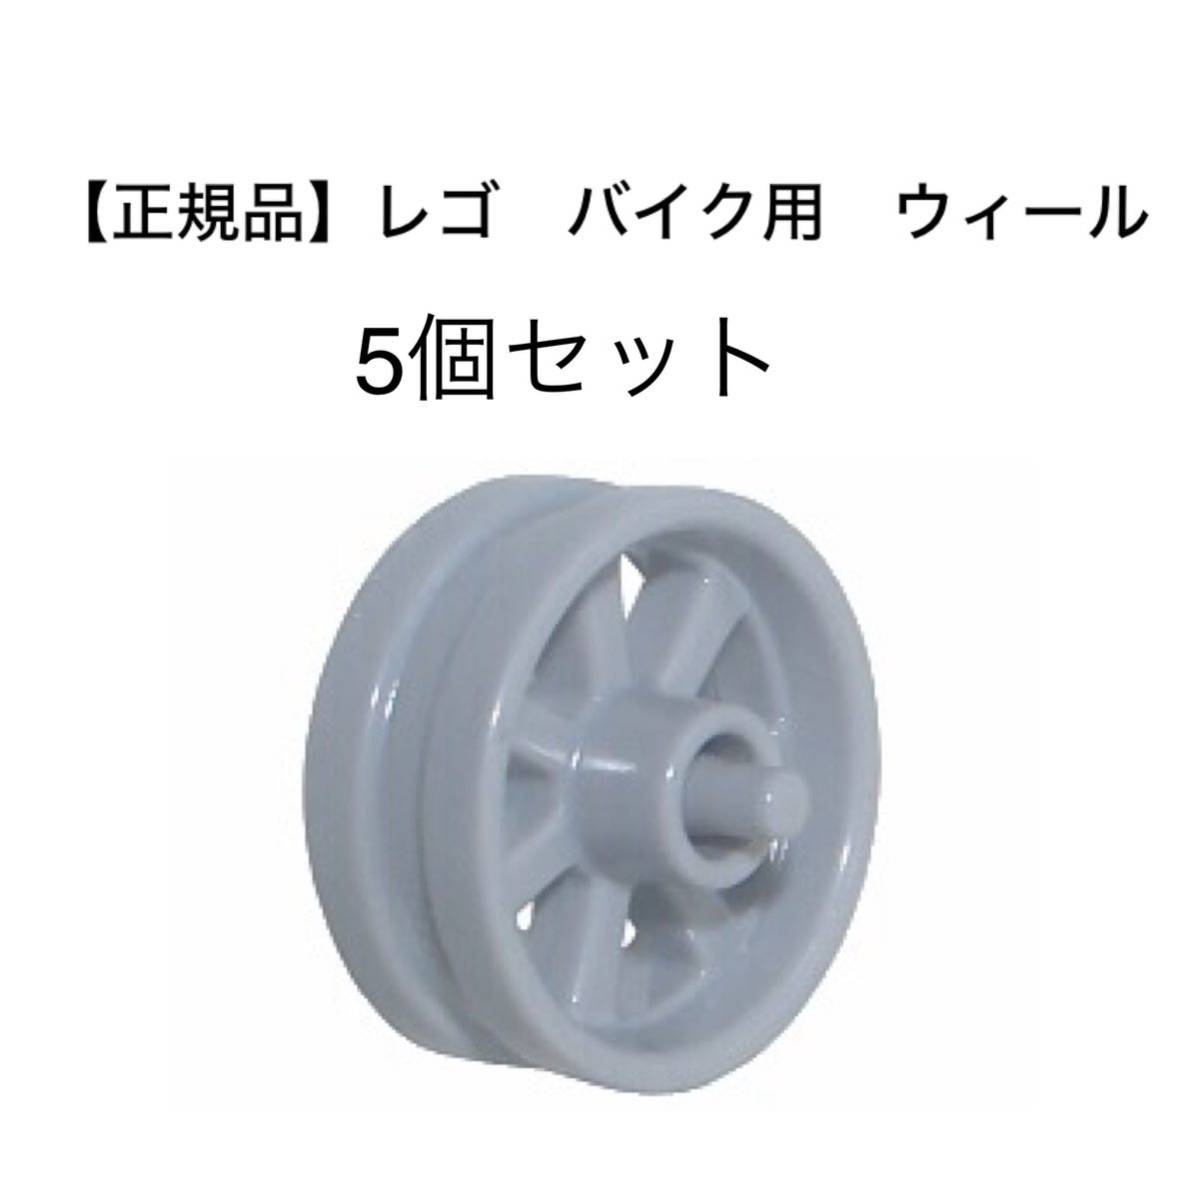 1 иен ~ [ стандартный товар ] Lego мотоцикл Wheel 50862 Lego